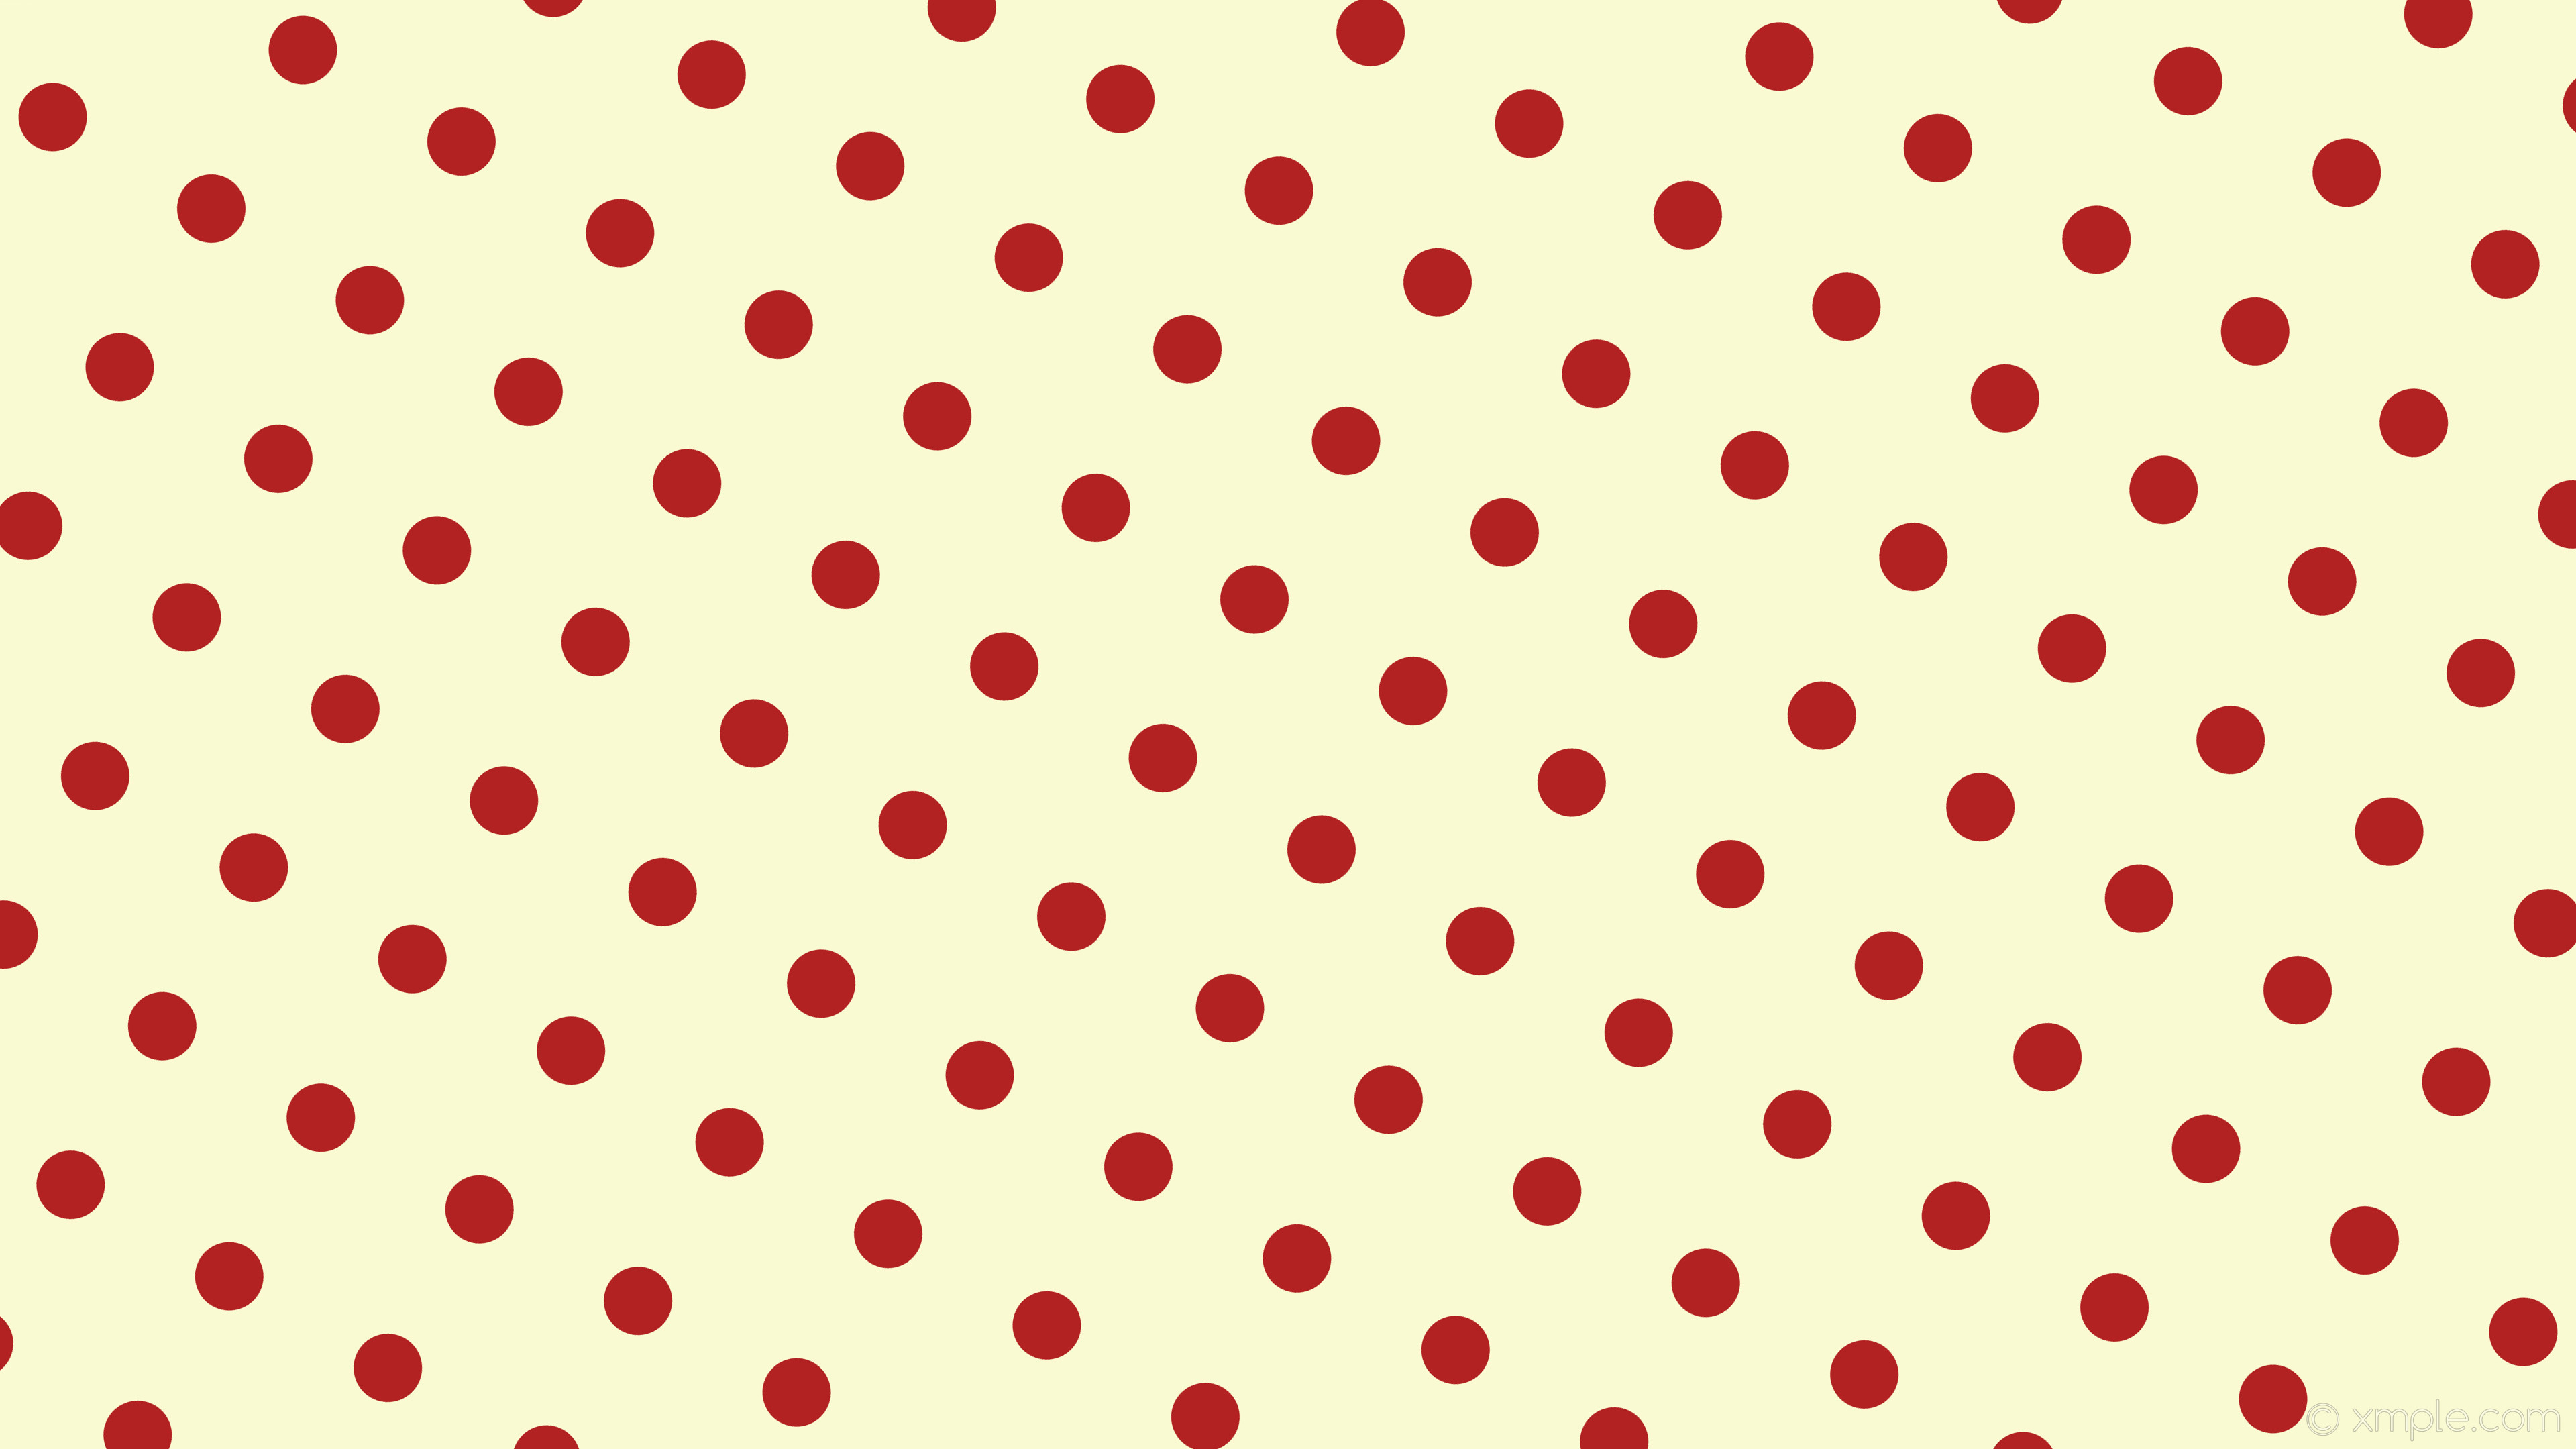 3840x2160 wallpaper dots yellow polka red spots light goldenrod yellow fire brick  #fafad2 #b22222 240